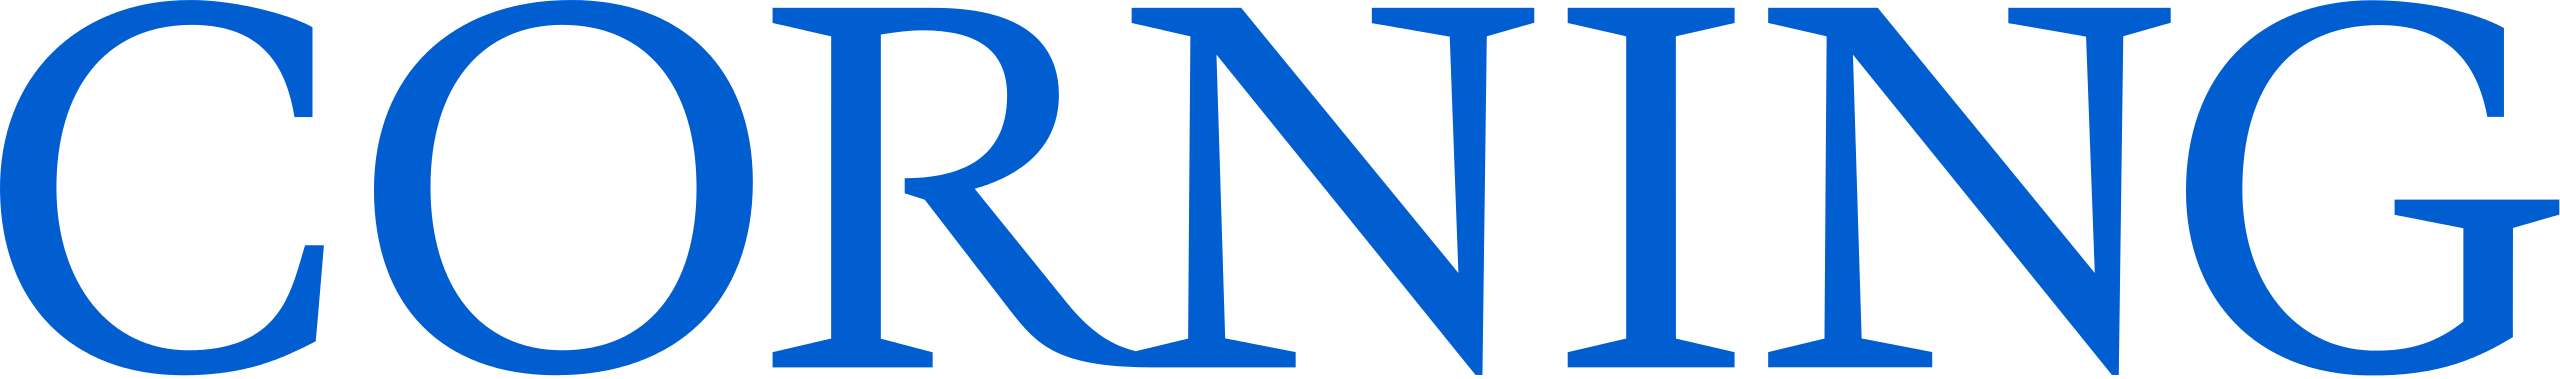 Corning Incorporated Logo